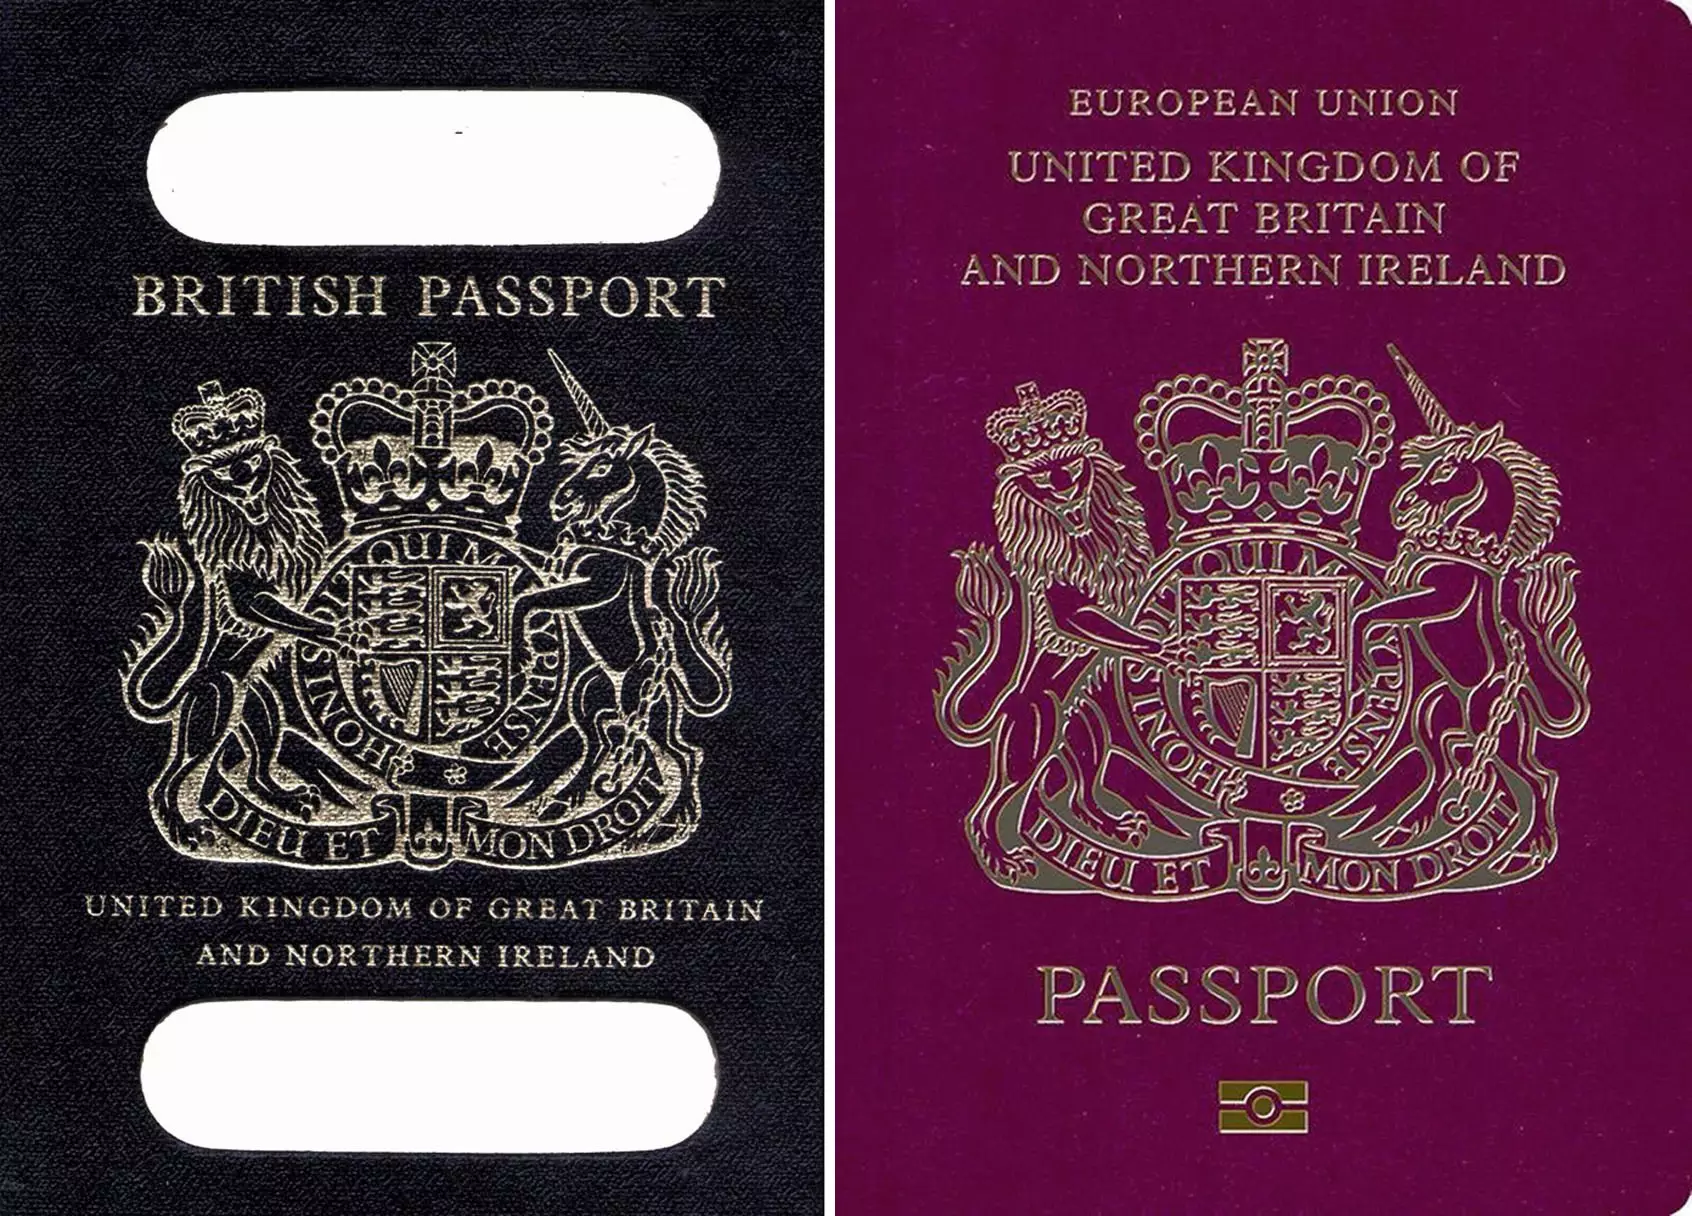 The old blue British passport and the current burgundy passport.